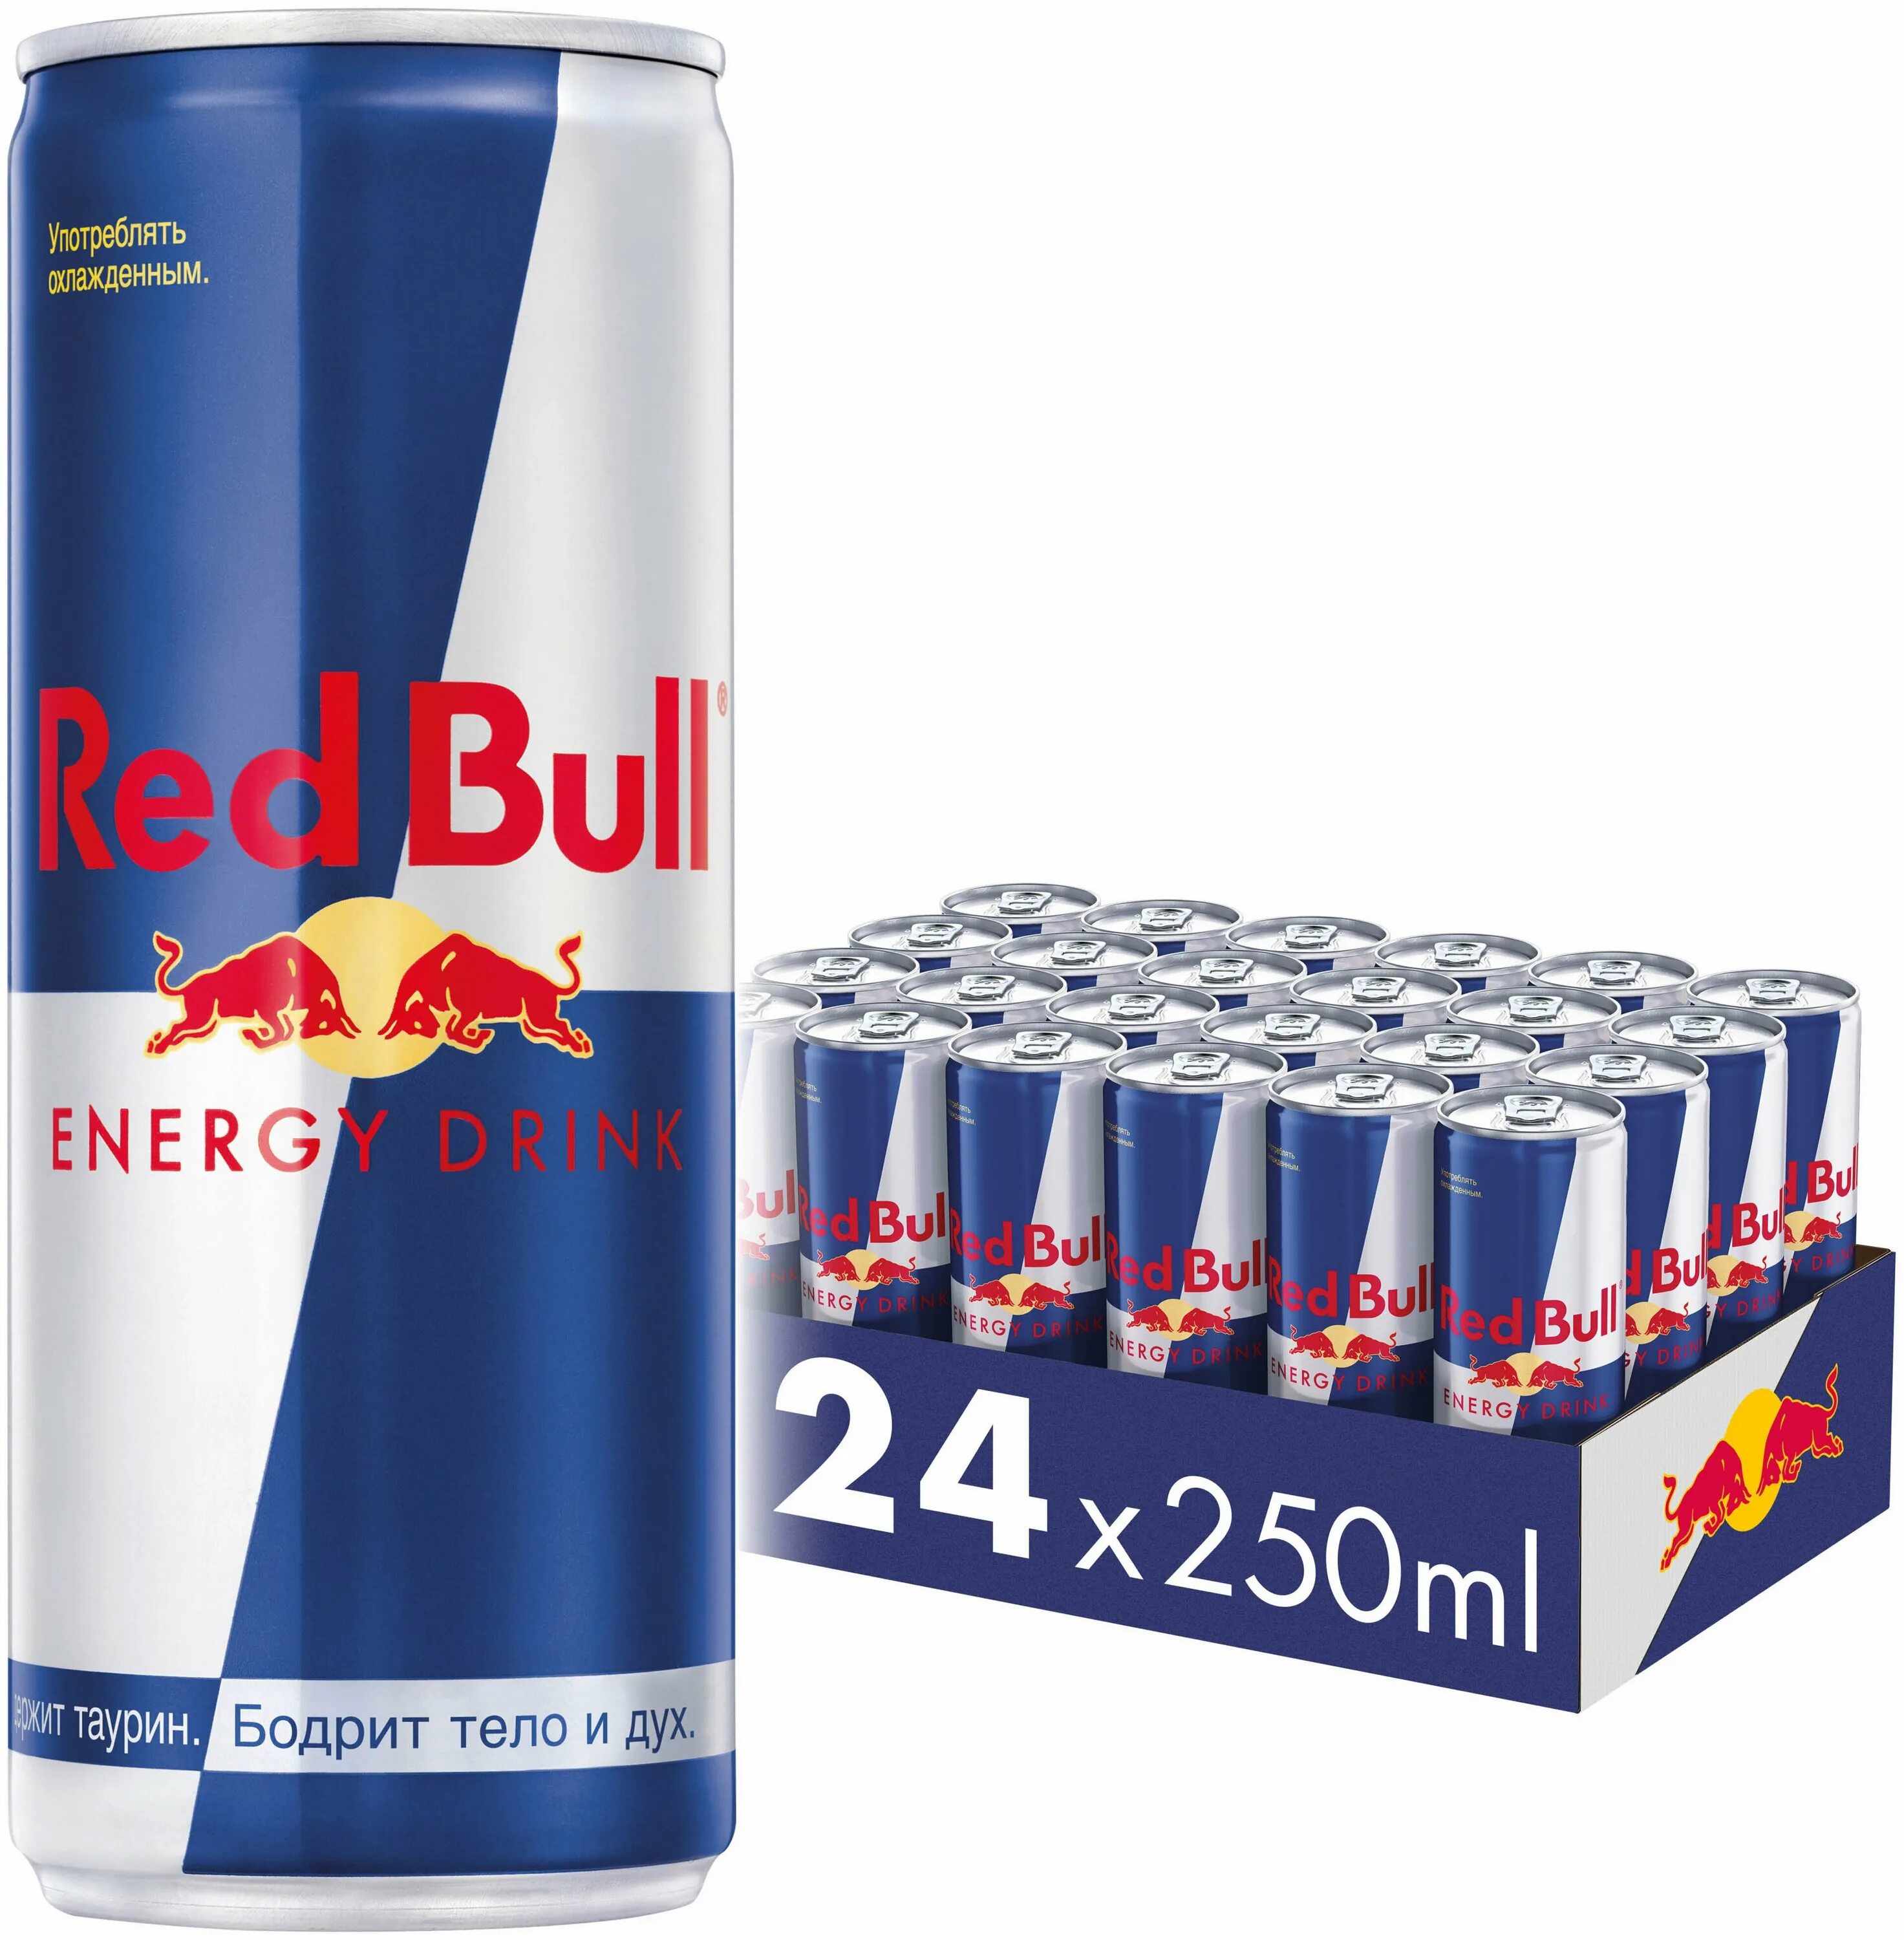 Редбул купить. Энергетический напиток Red bull 250 мл. Ред Булл 0.25 упаковка. Напиток энергетический ред Булл ред 0.25л ж/б. Энергетик Red bull 0.25*24.